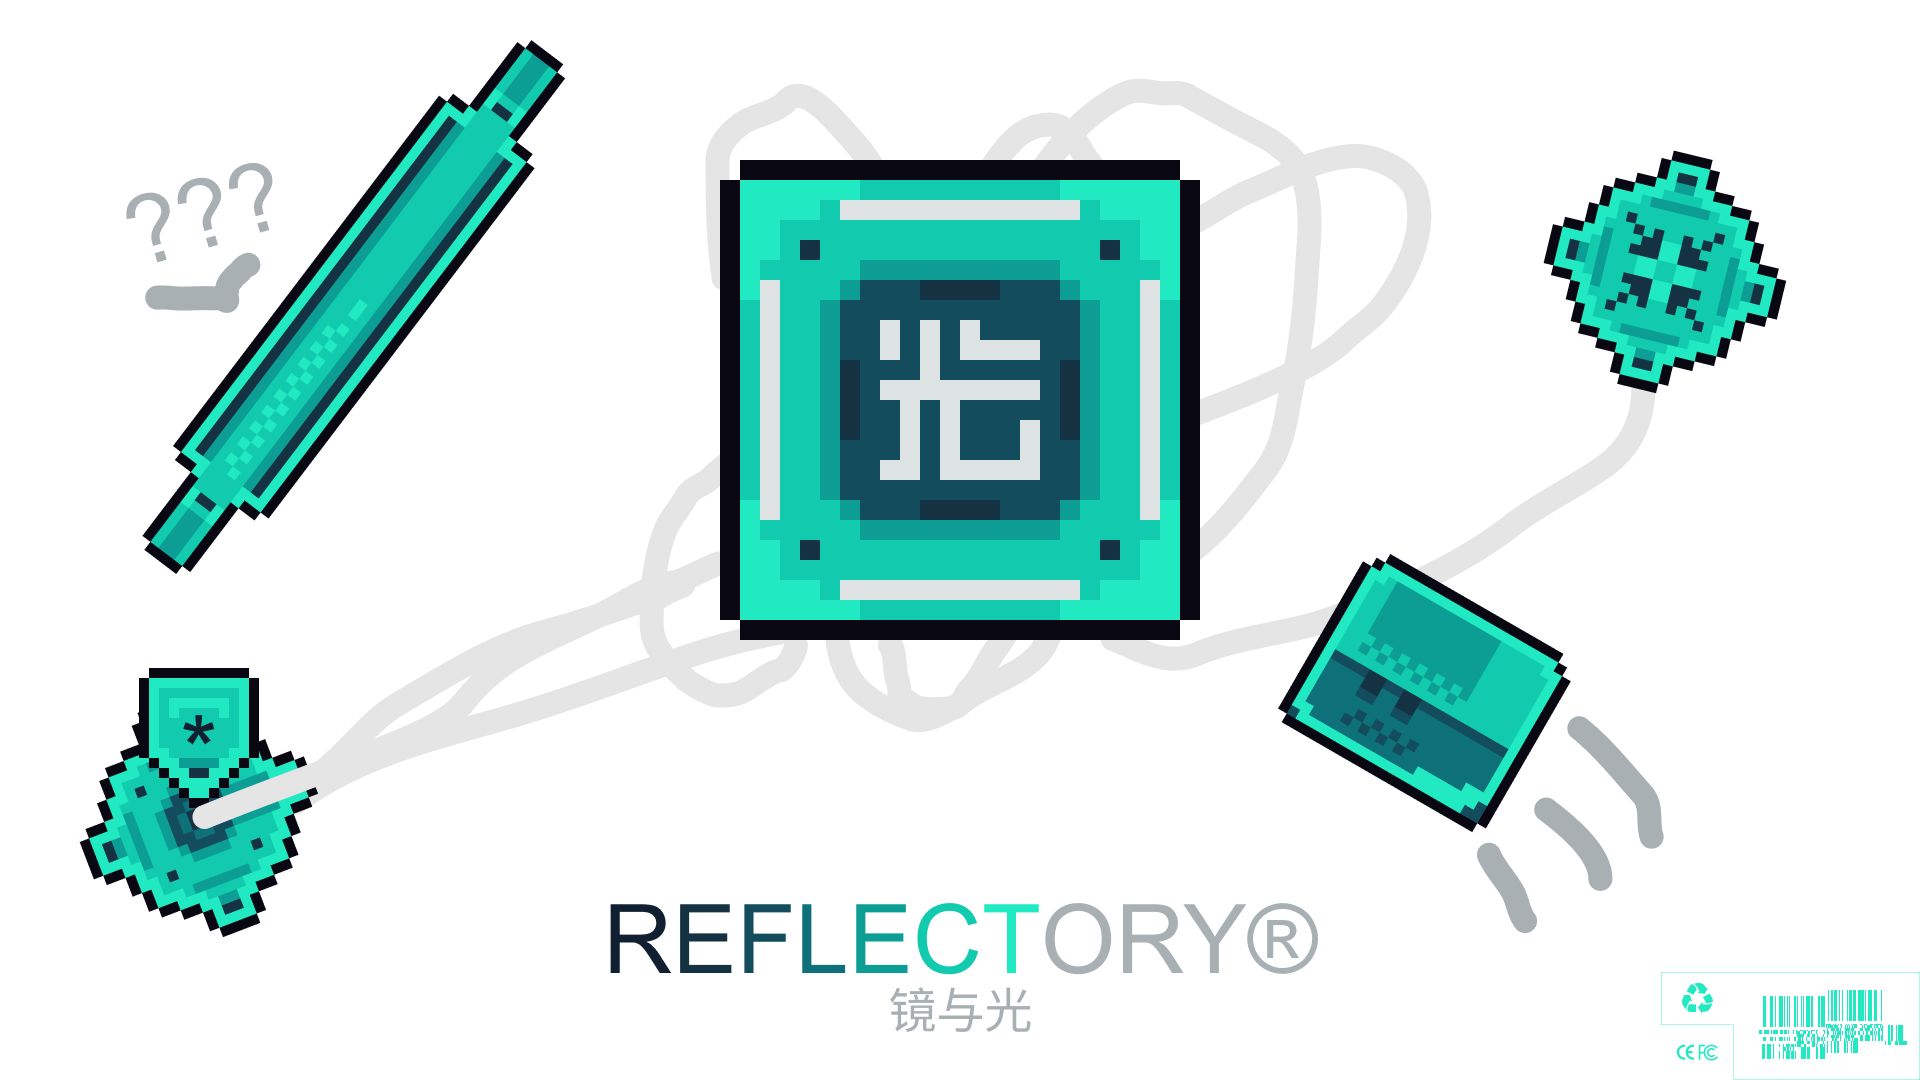 Reflectory1.0